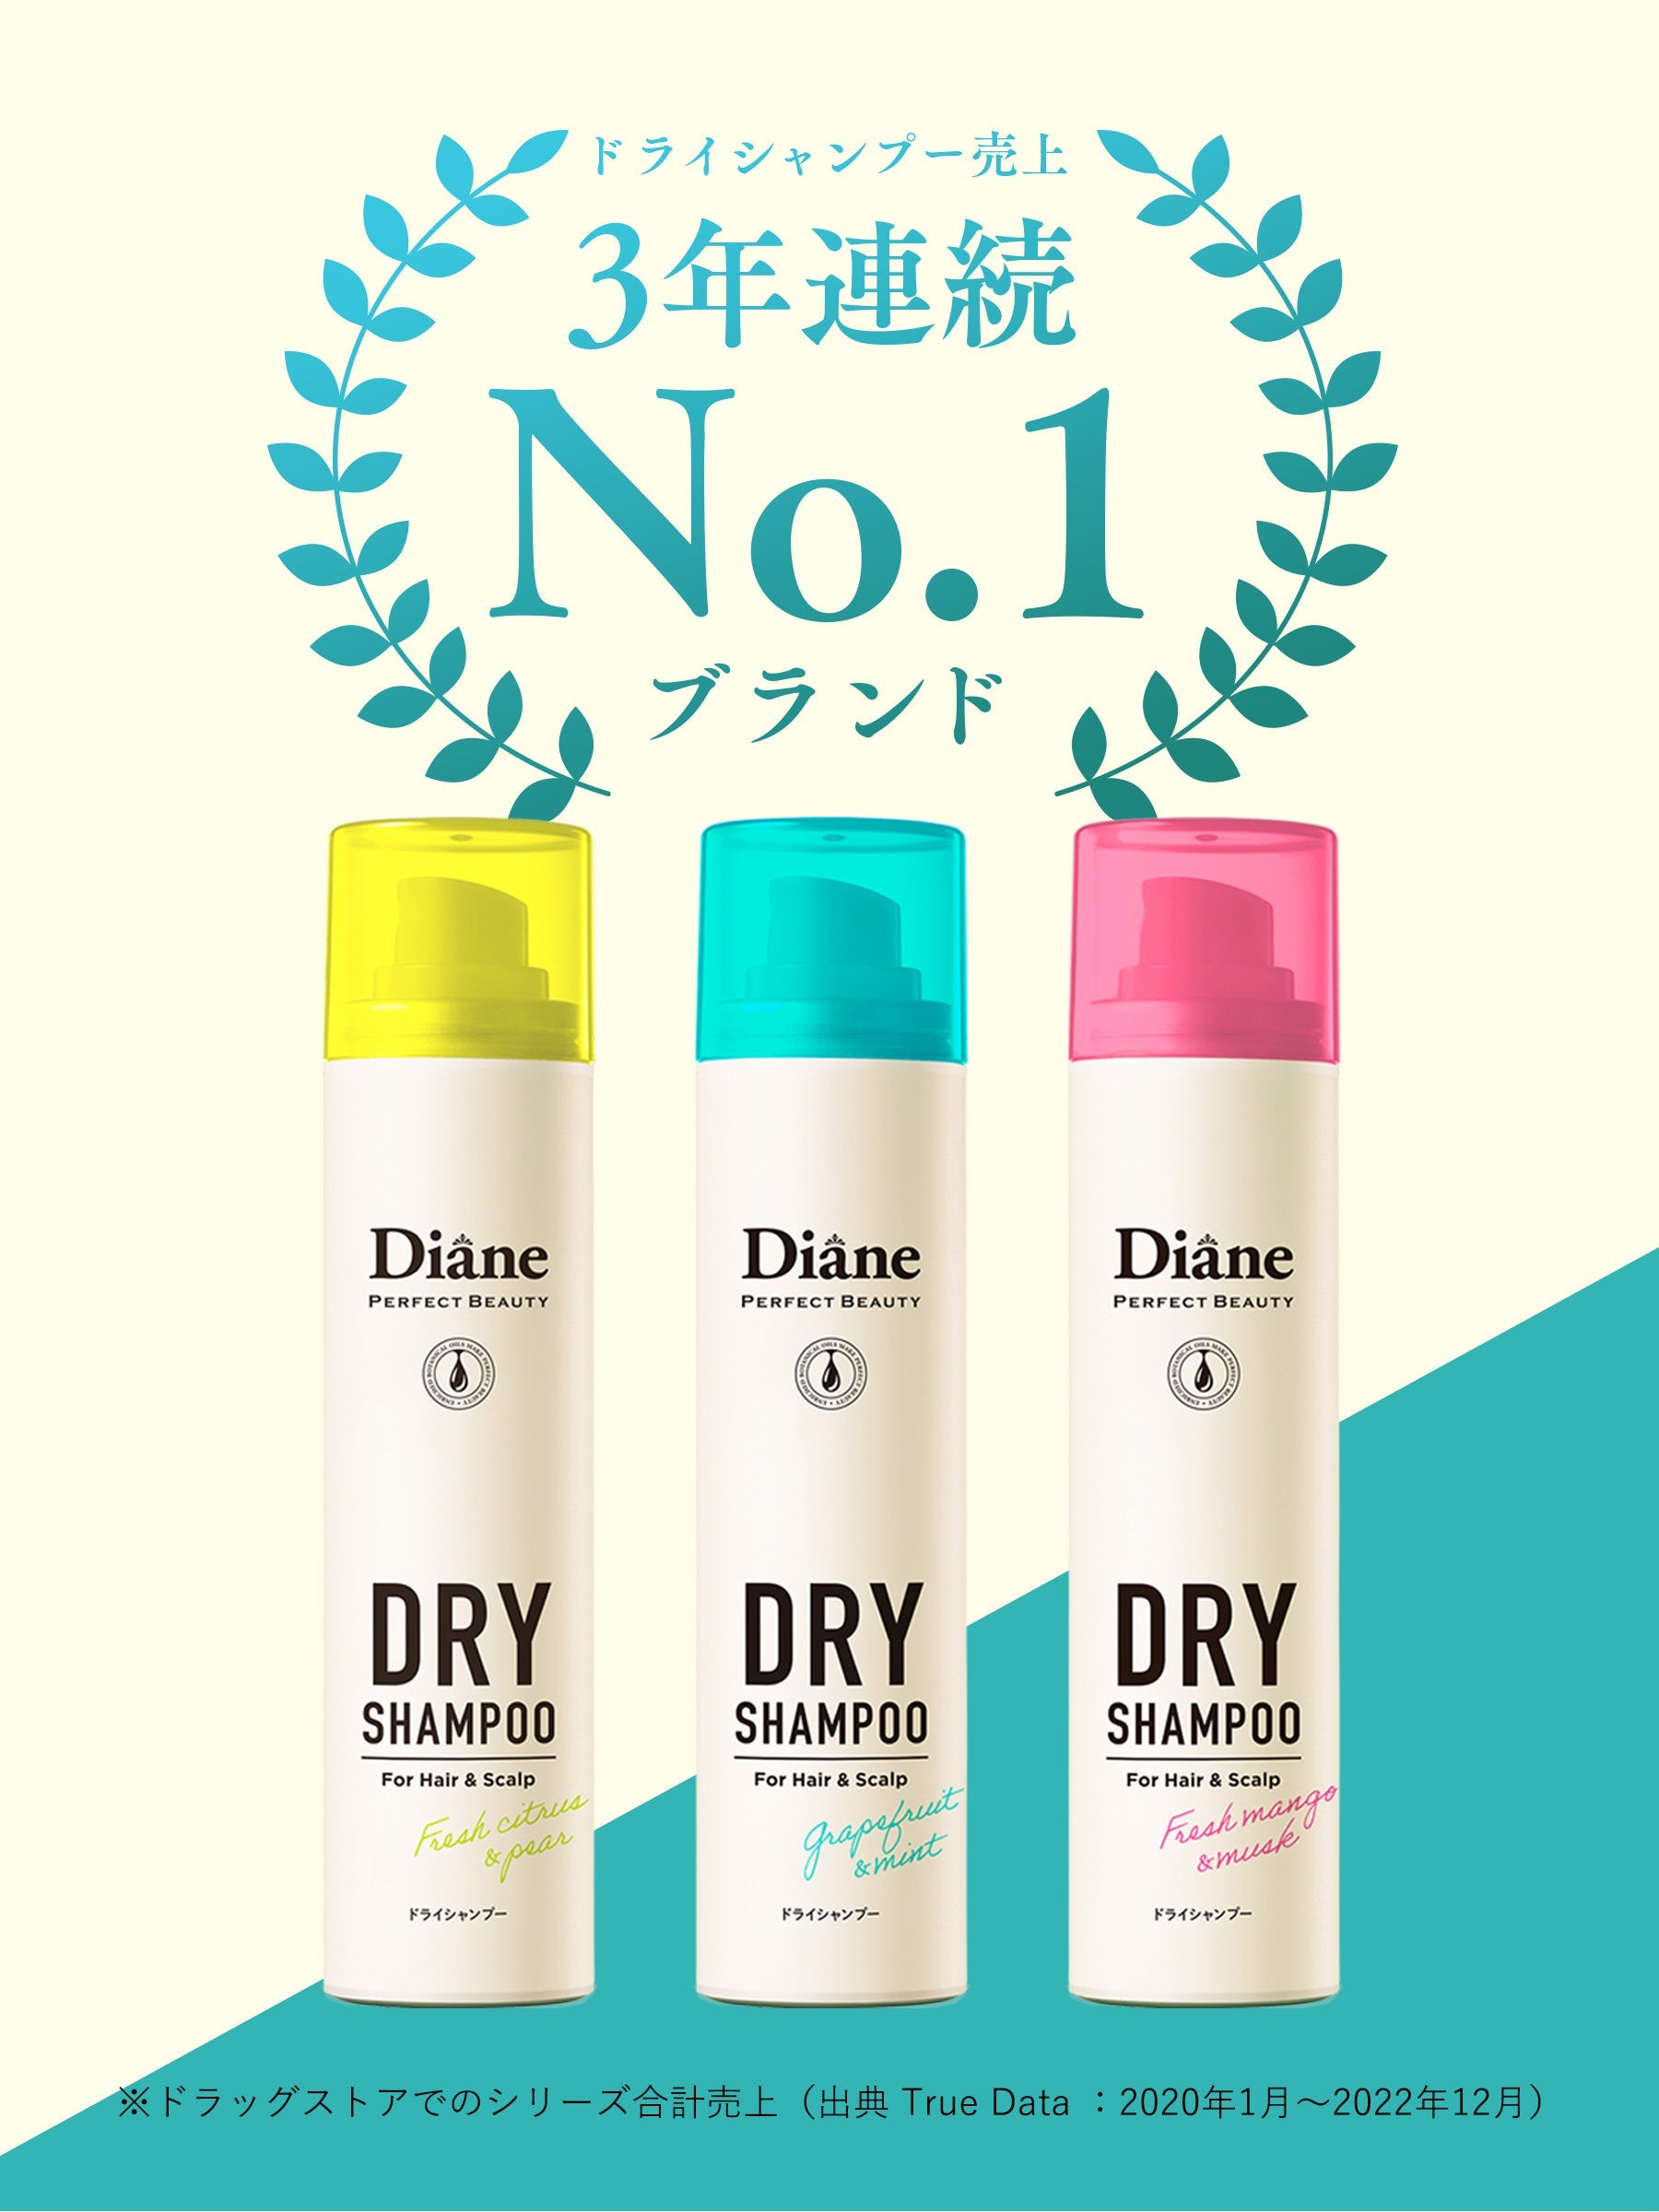 Moist Diane Perfect Beauty Dry Shampoo Grapefruit & Mint Beauty Moist Diane   